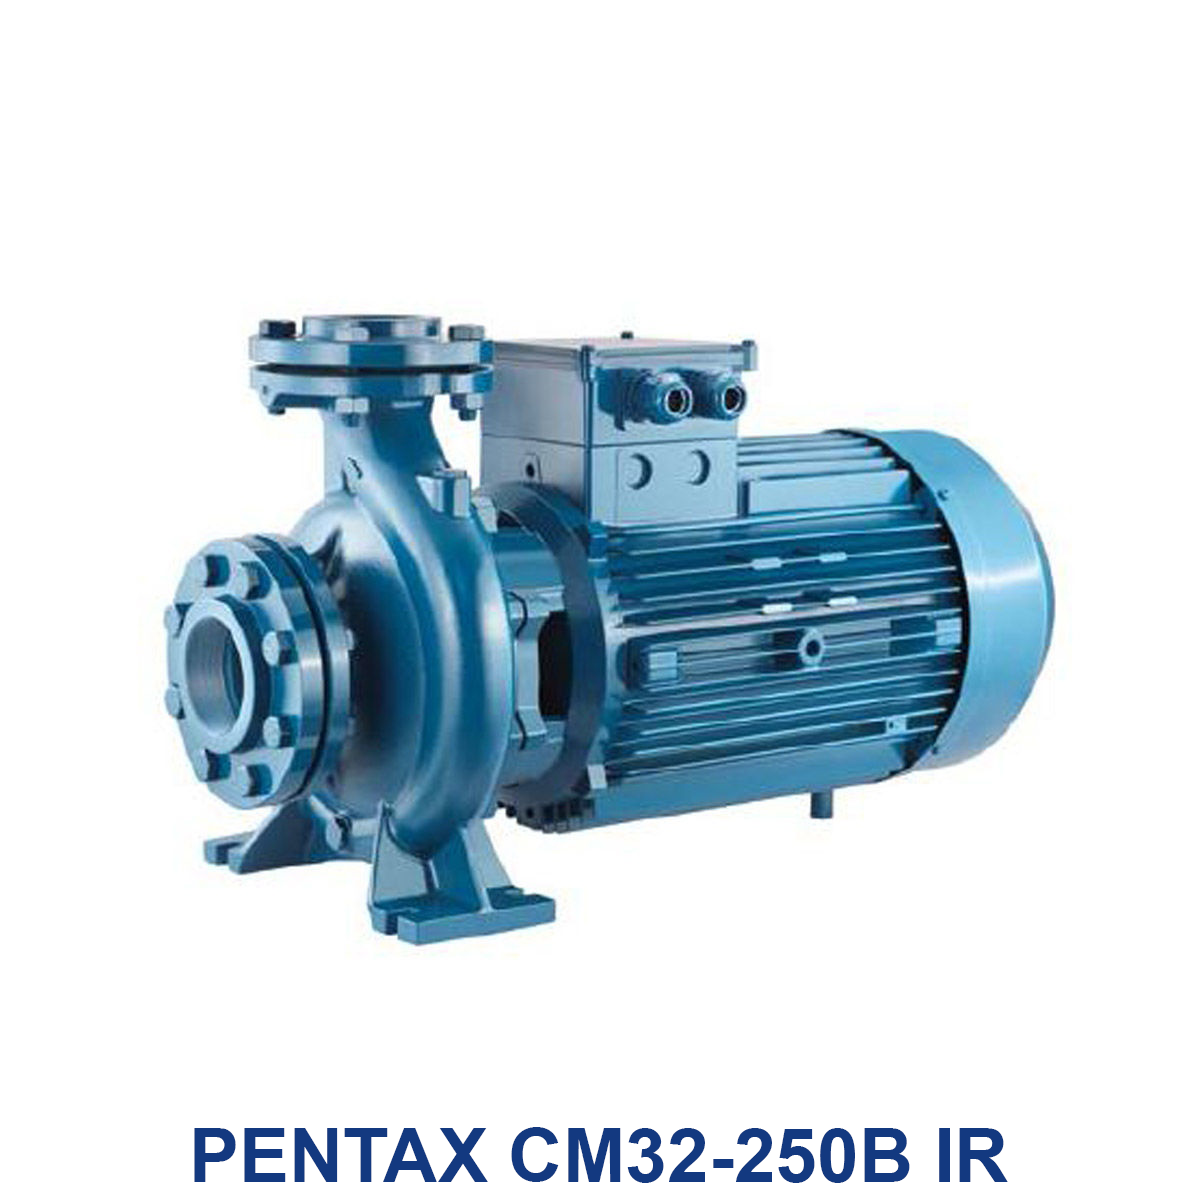 PENTAX-CM32-250B-IR